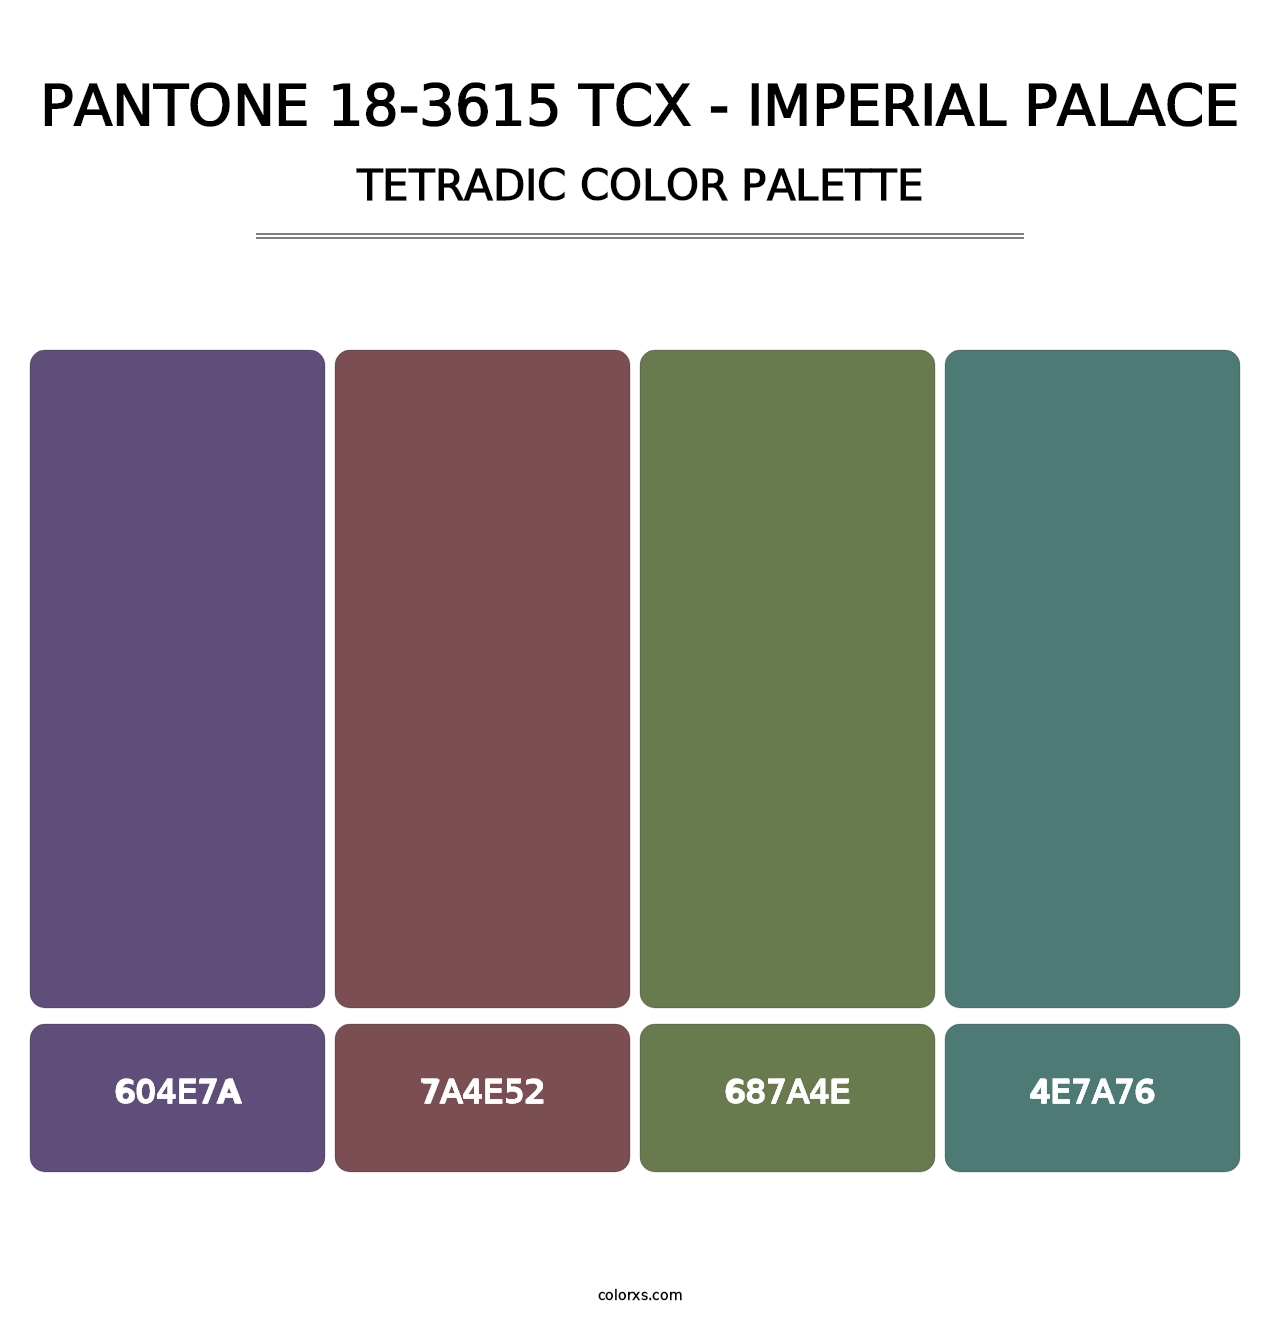 PANTONE 18-3615 TCX - Imperial Palace - Tetradic Color Palette